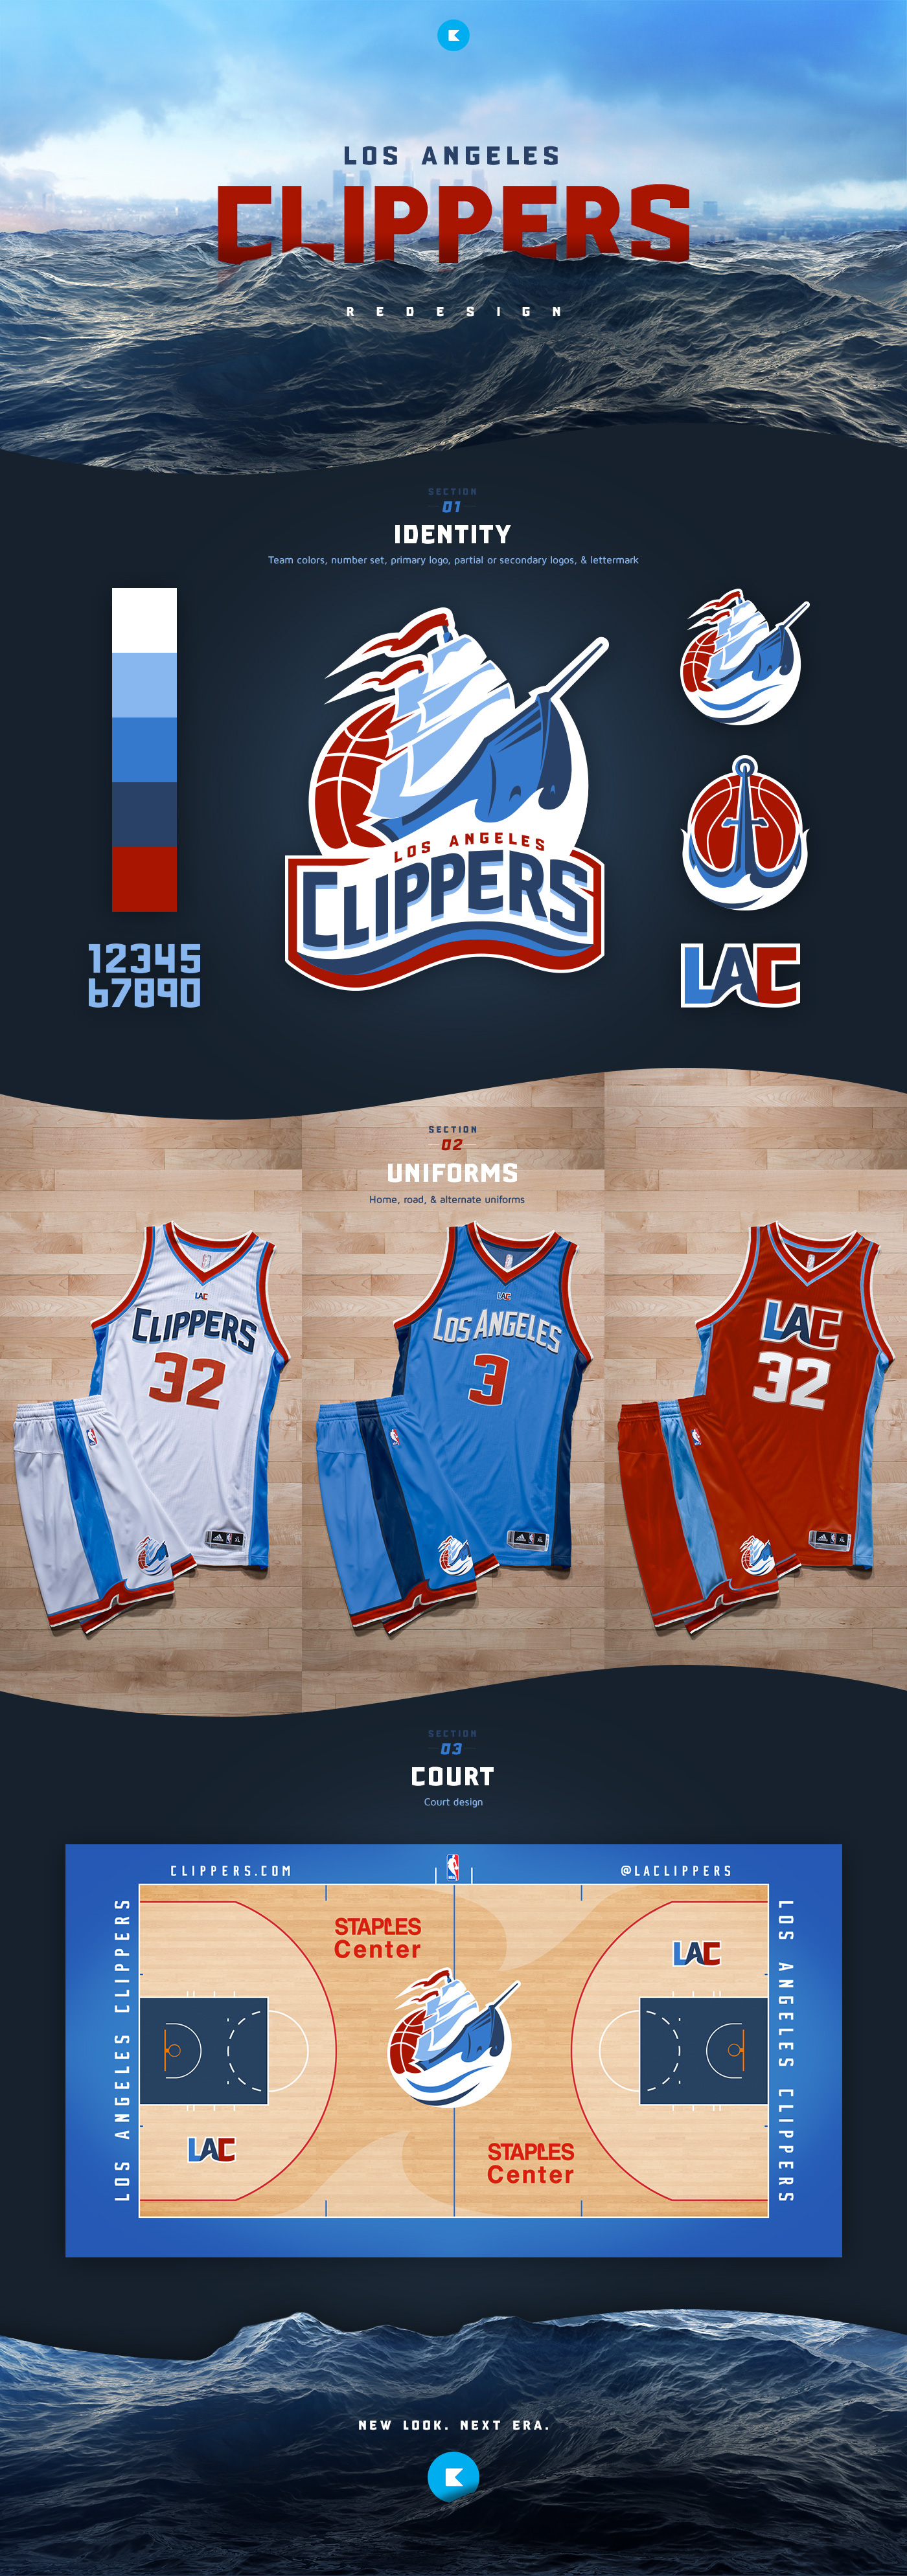 Los Angeles Clippers redesign Rebrand uniform design COURT DESIGN basketball sports